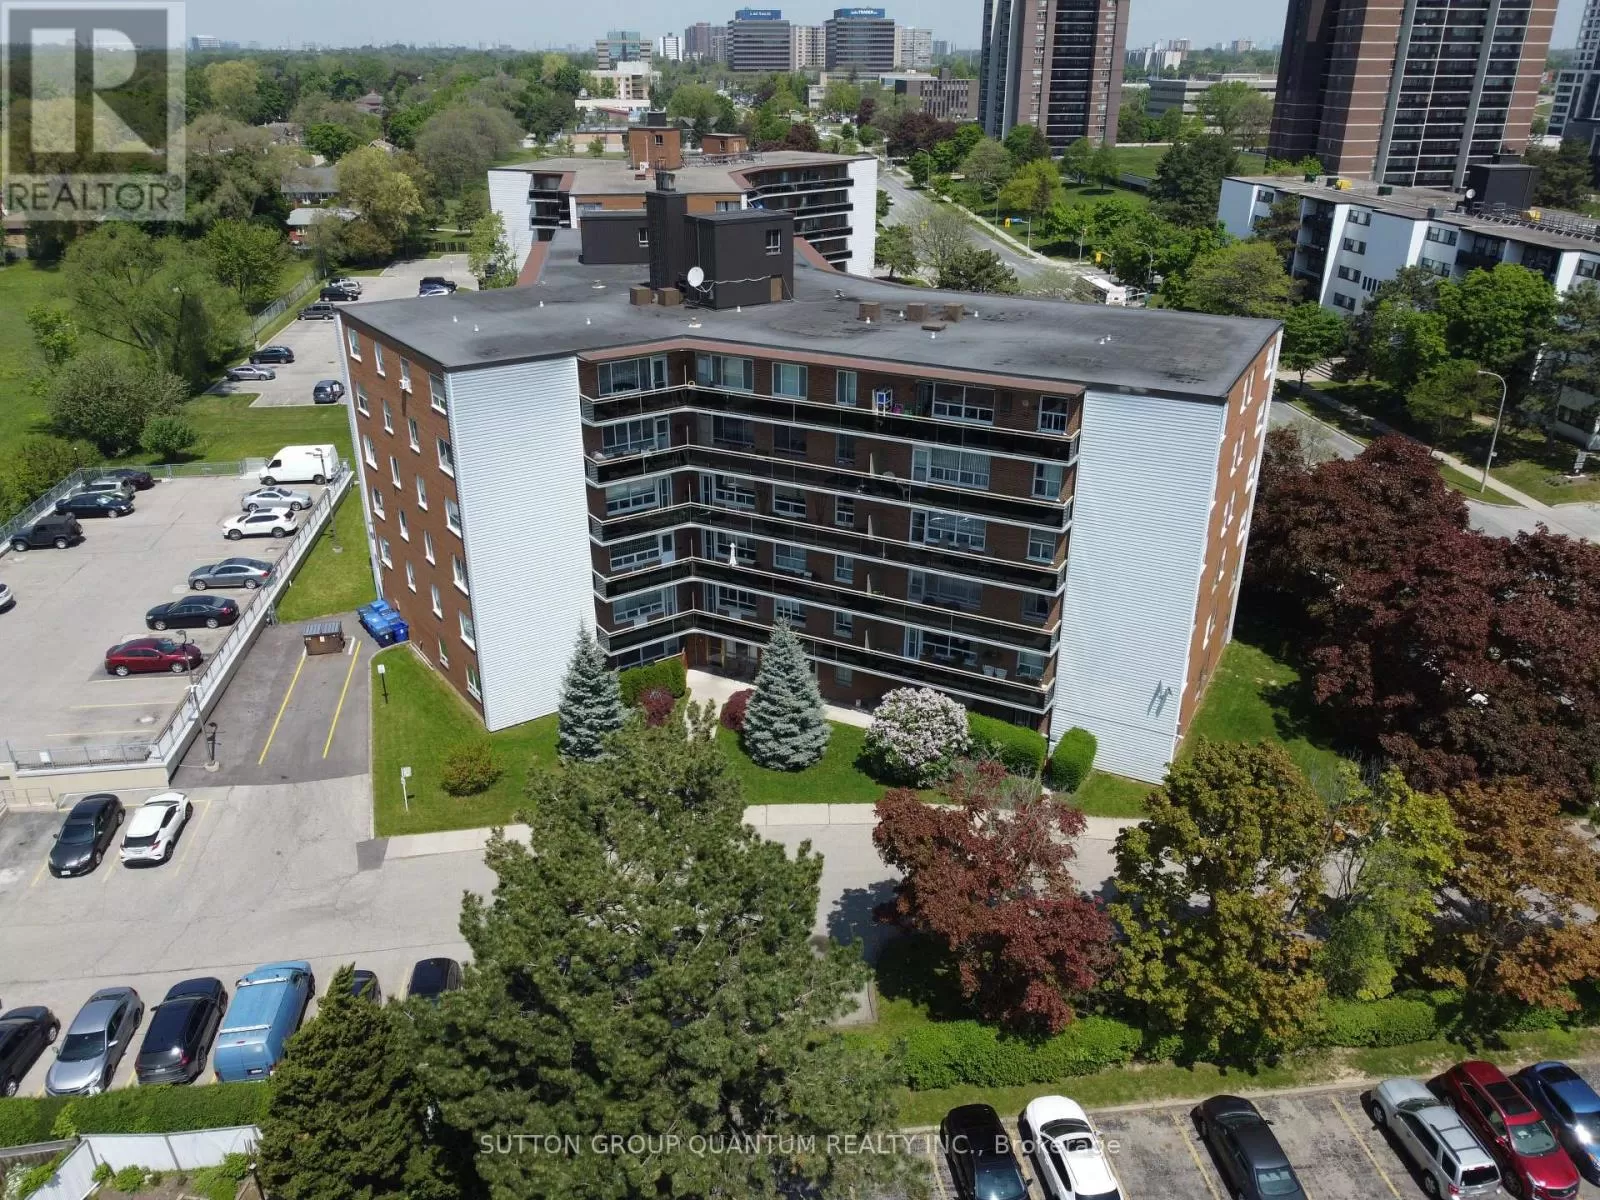 Apartment for rent: 603 - 346 The West Mall, Toronto, Ontario M9C 1E5